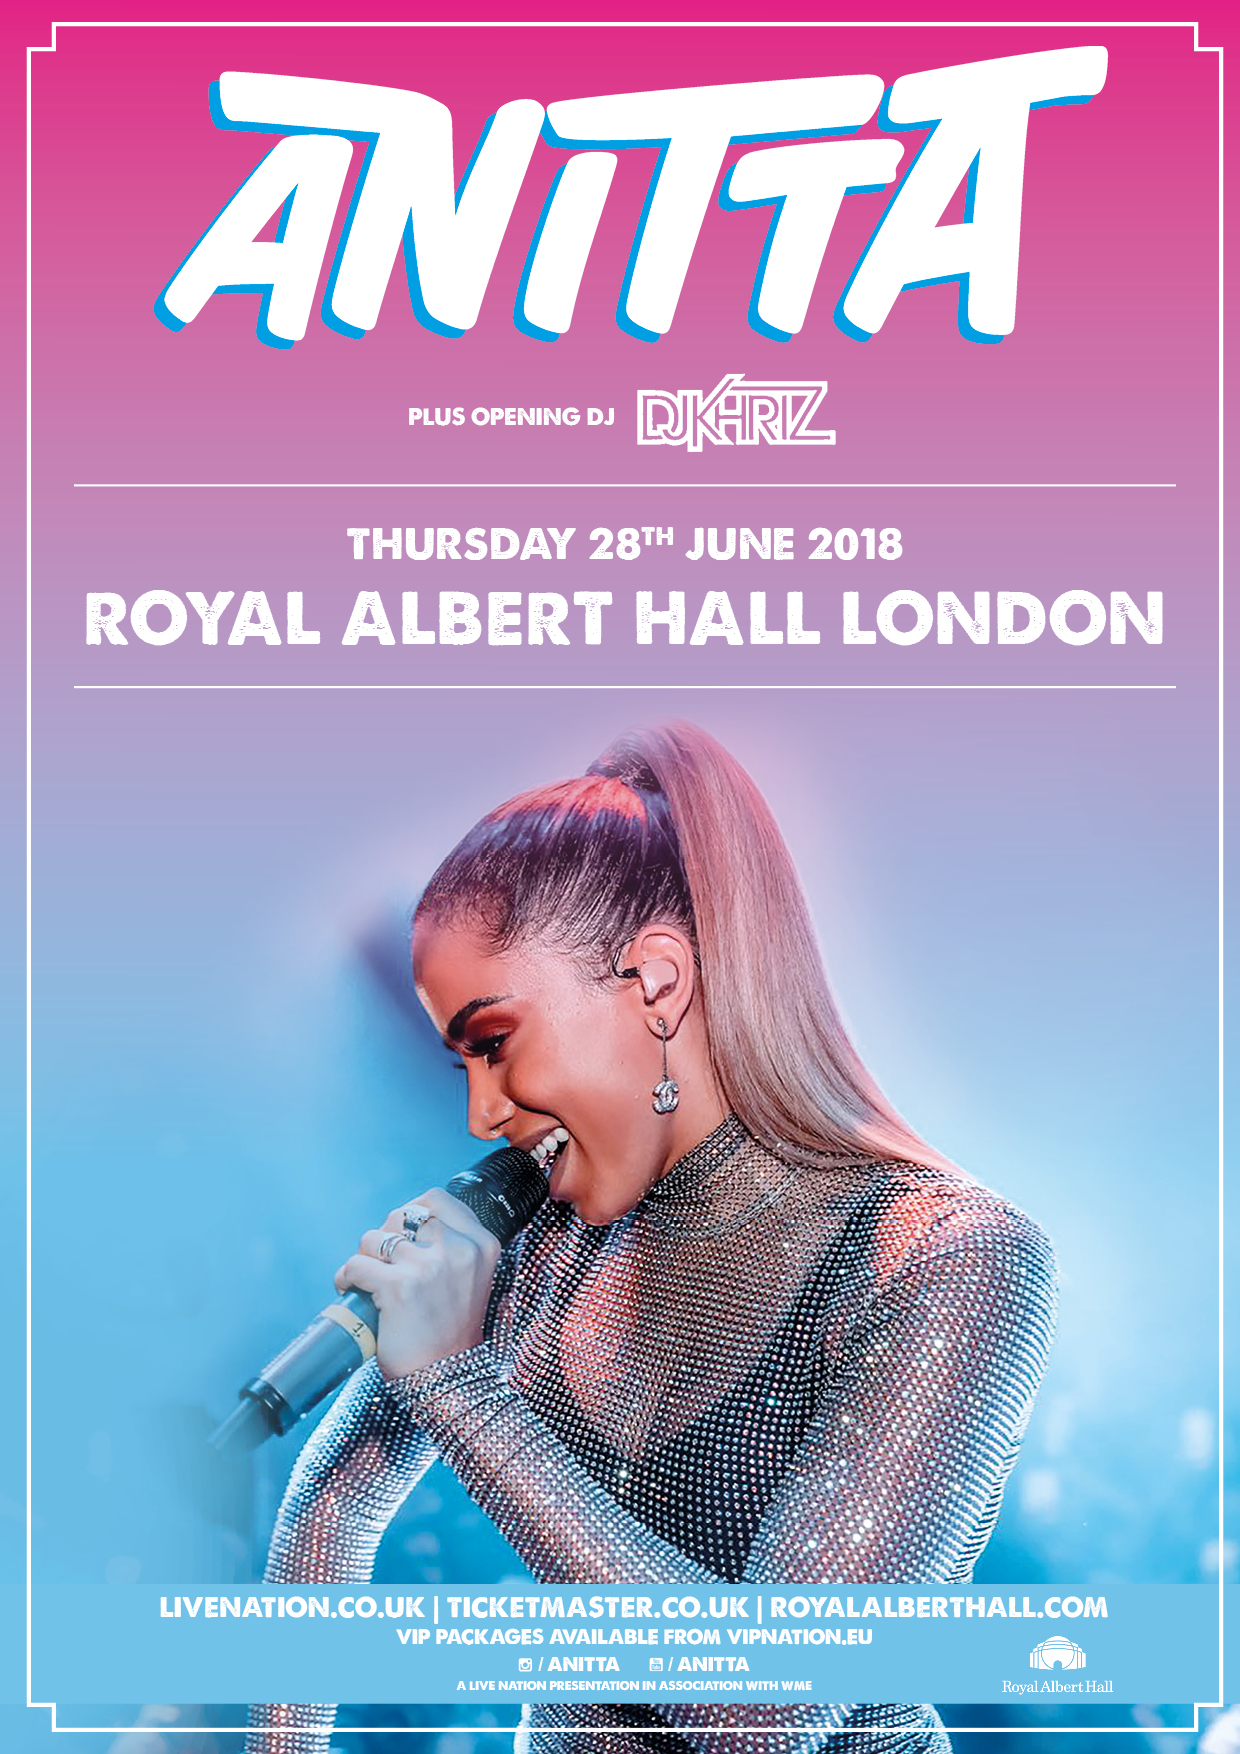 Anitta will perform at the Royal Albert Hall 